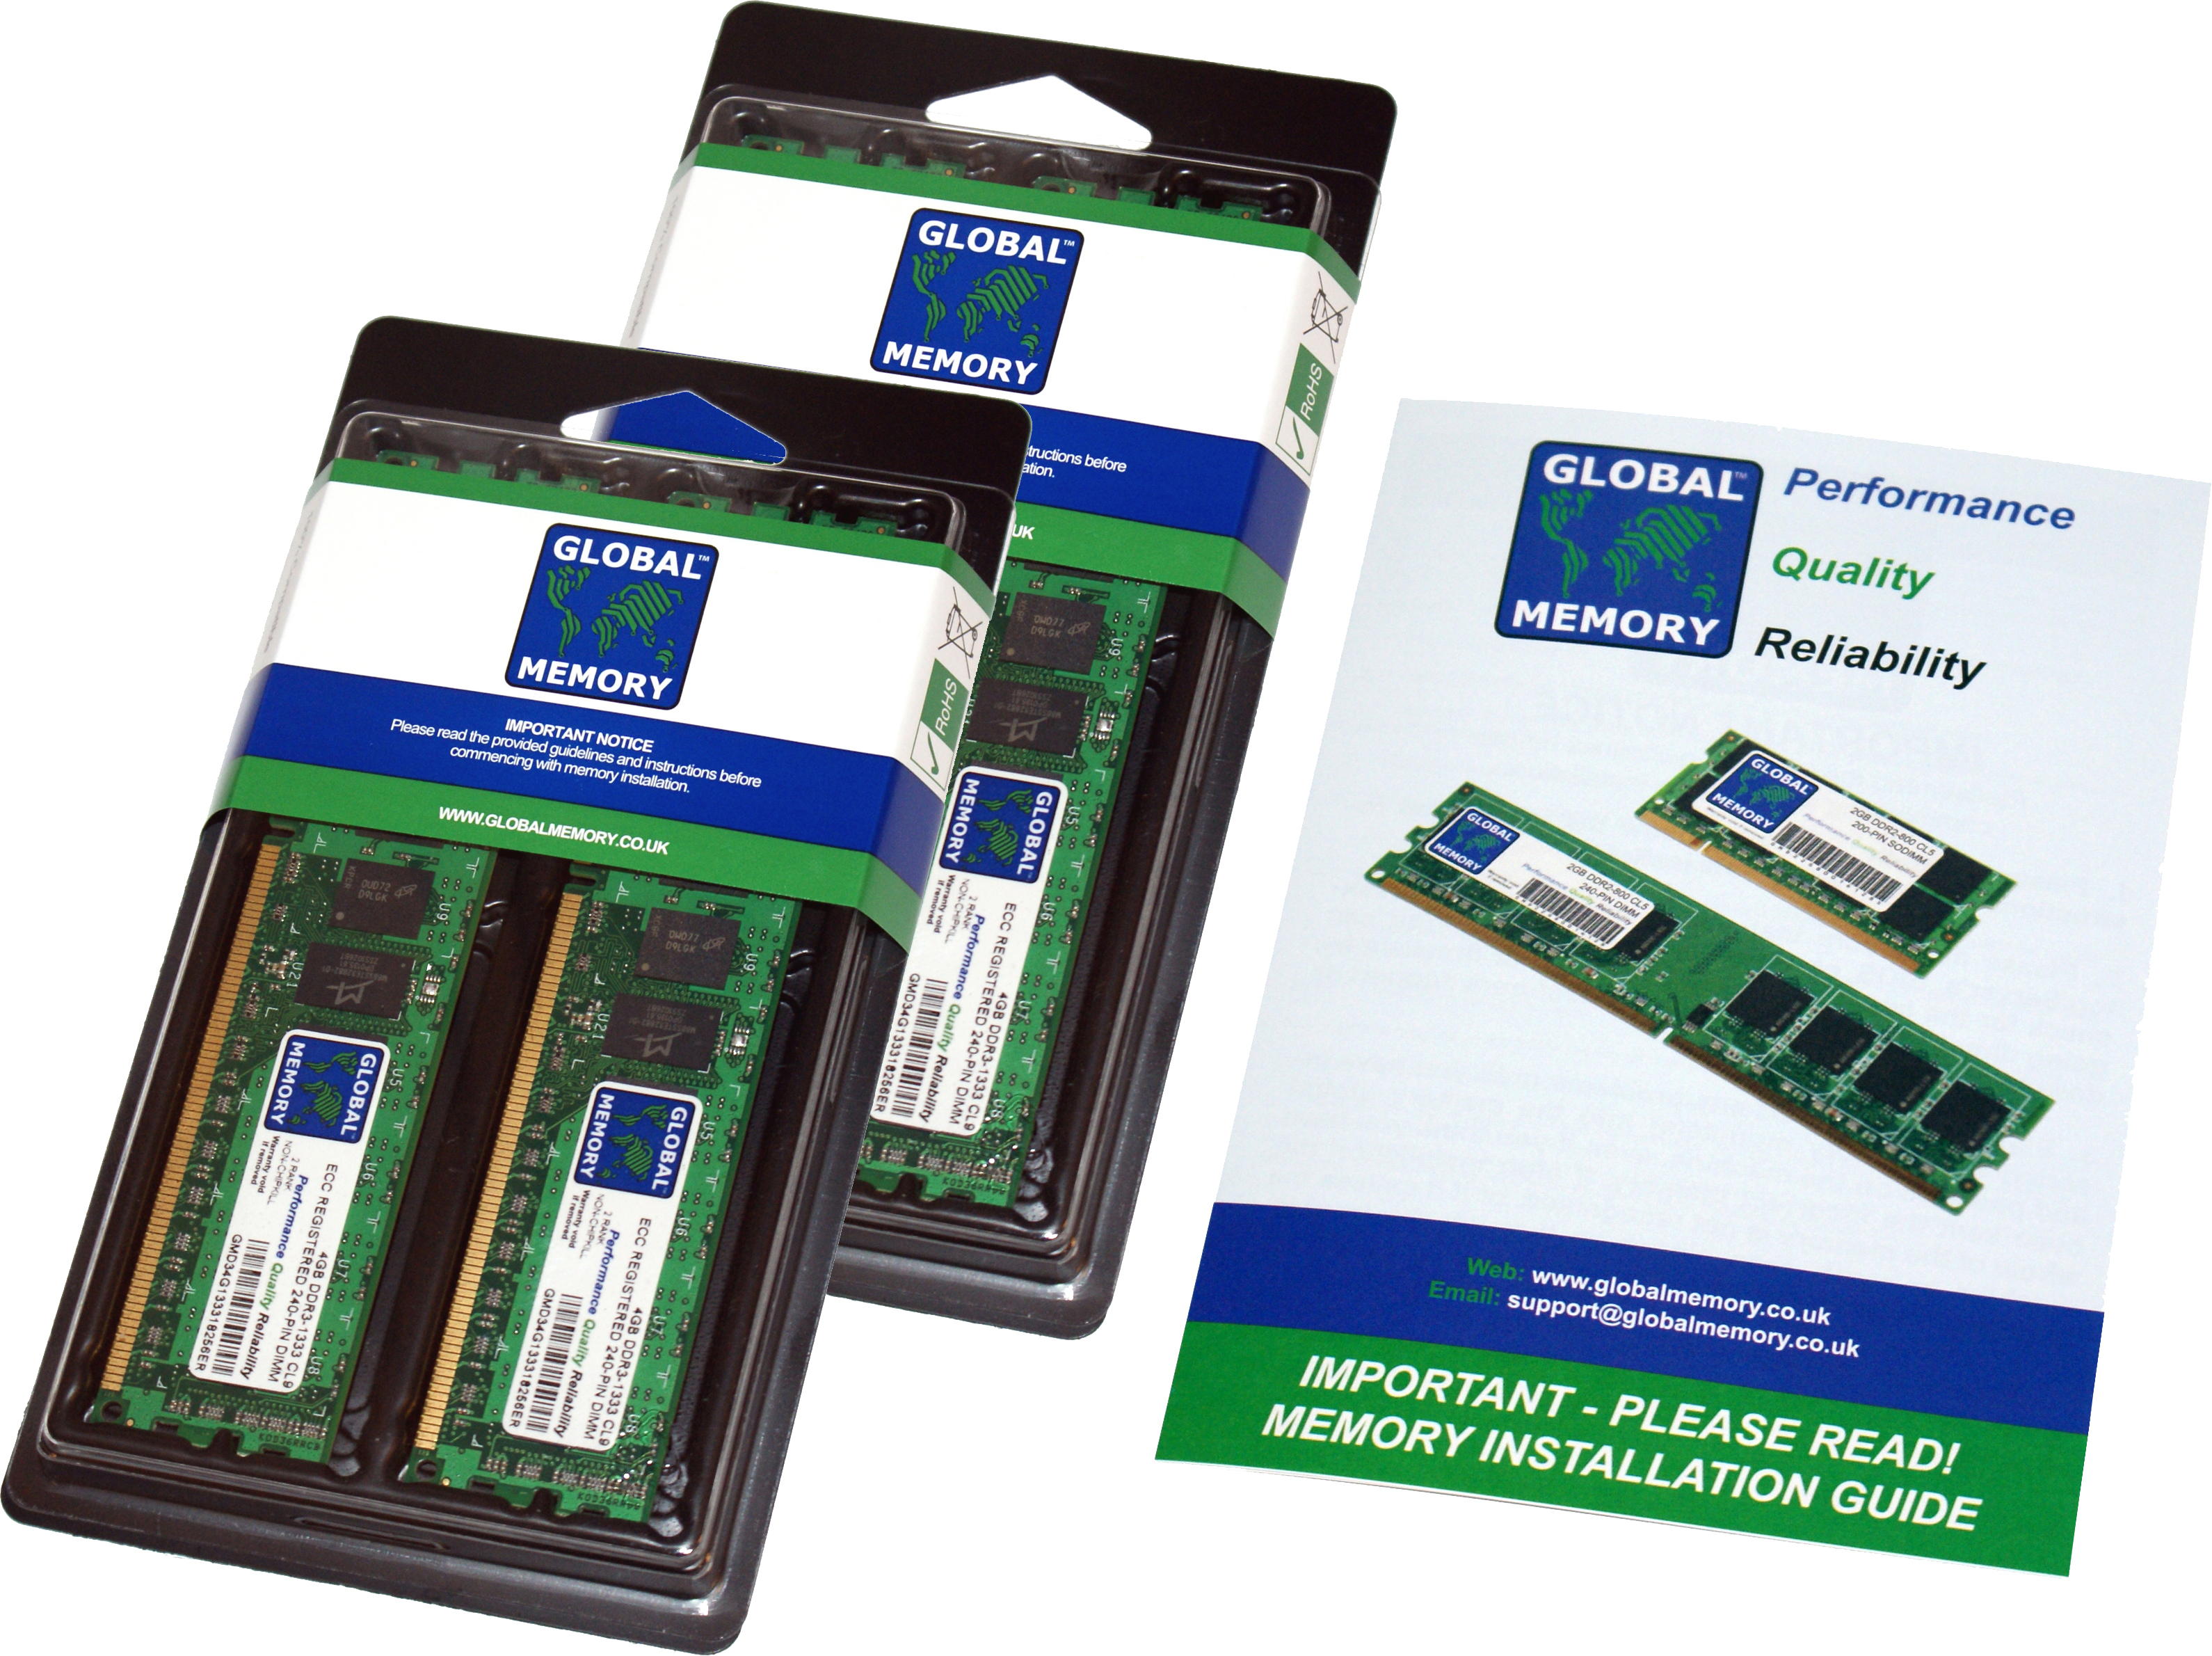 64GB (4 x 16GB) DDR4 2933MHz PC4-23400 288-PIN ECC REGISTERED DIMM (RDIMM) MEMORY RAM KIT FOR LENOVO SERVERS/WORKSTATIONS (8 RANK KIT CHIPKILL)